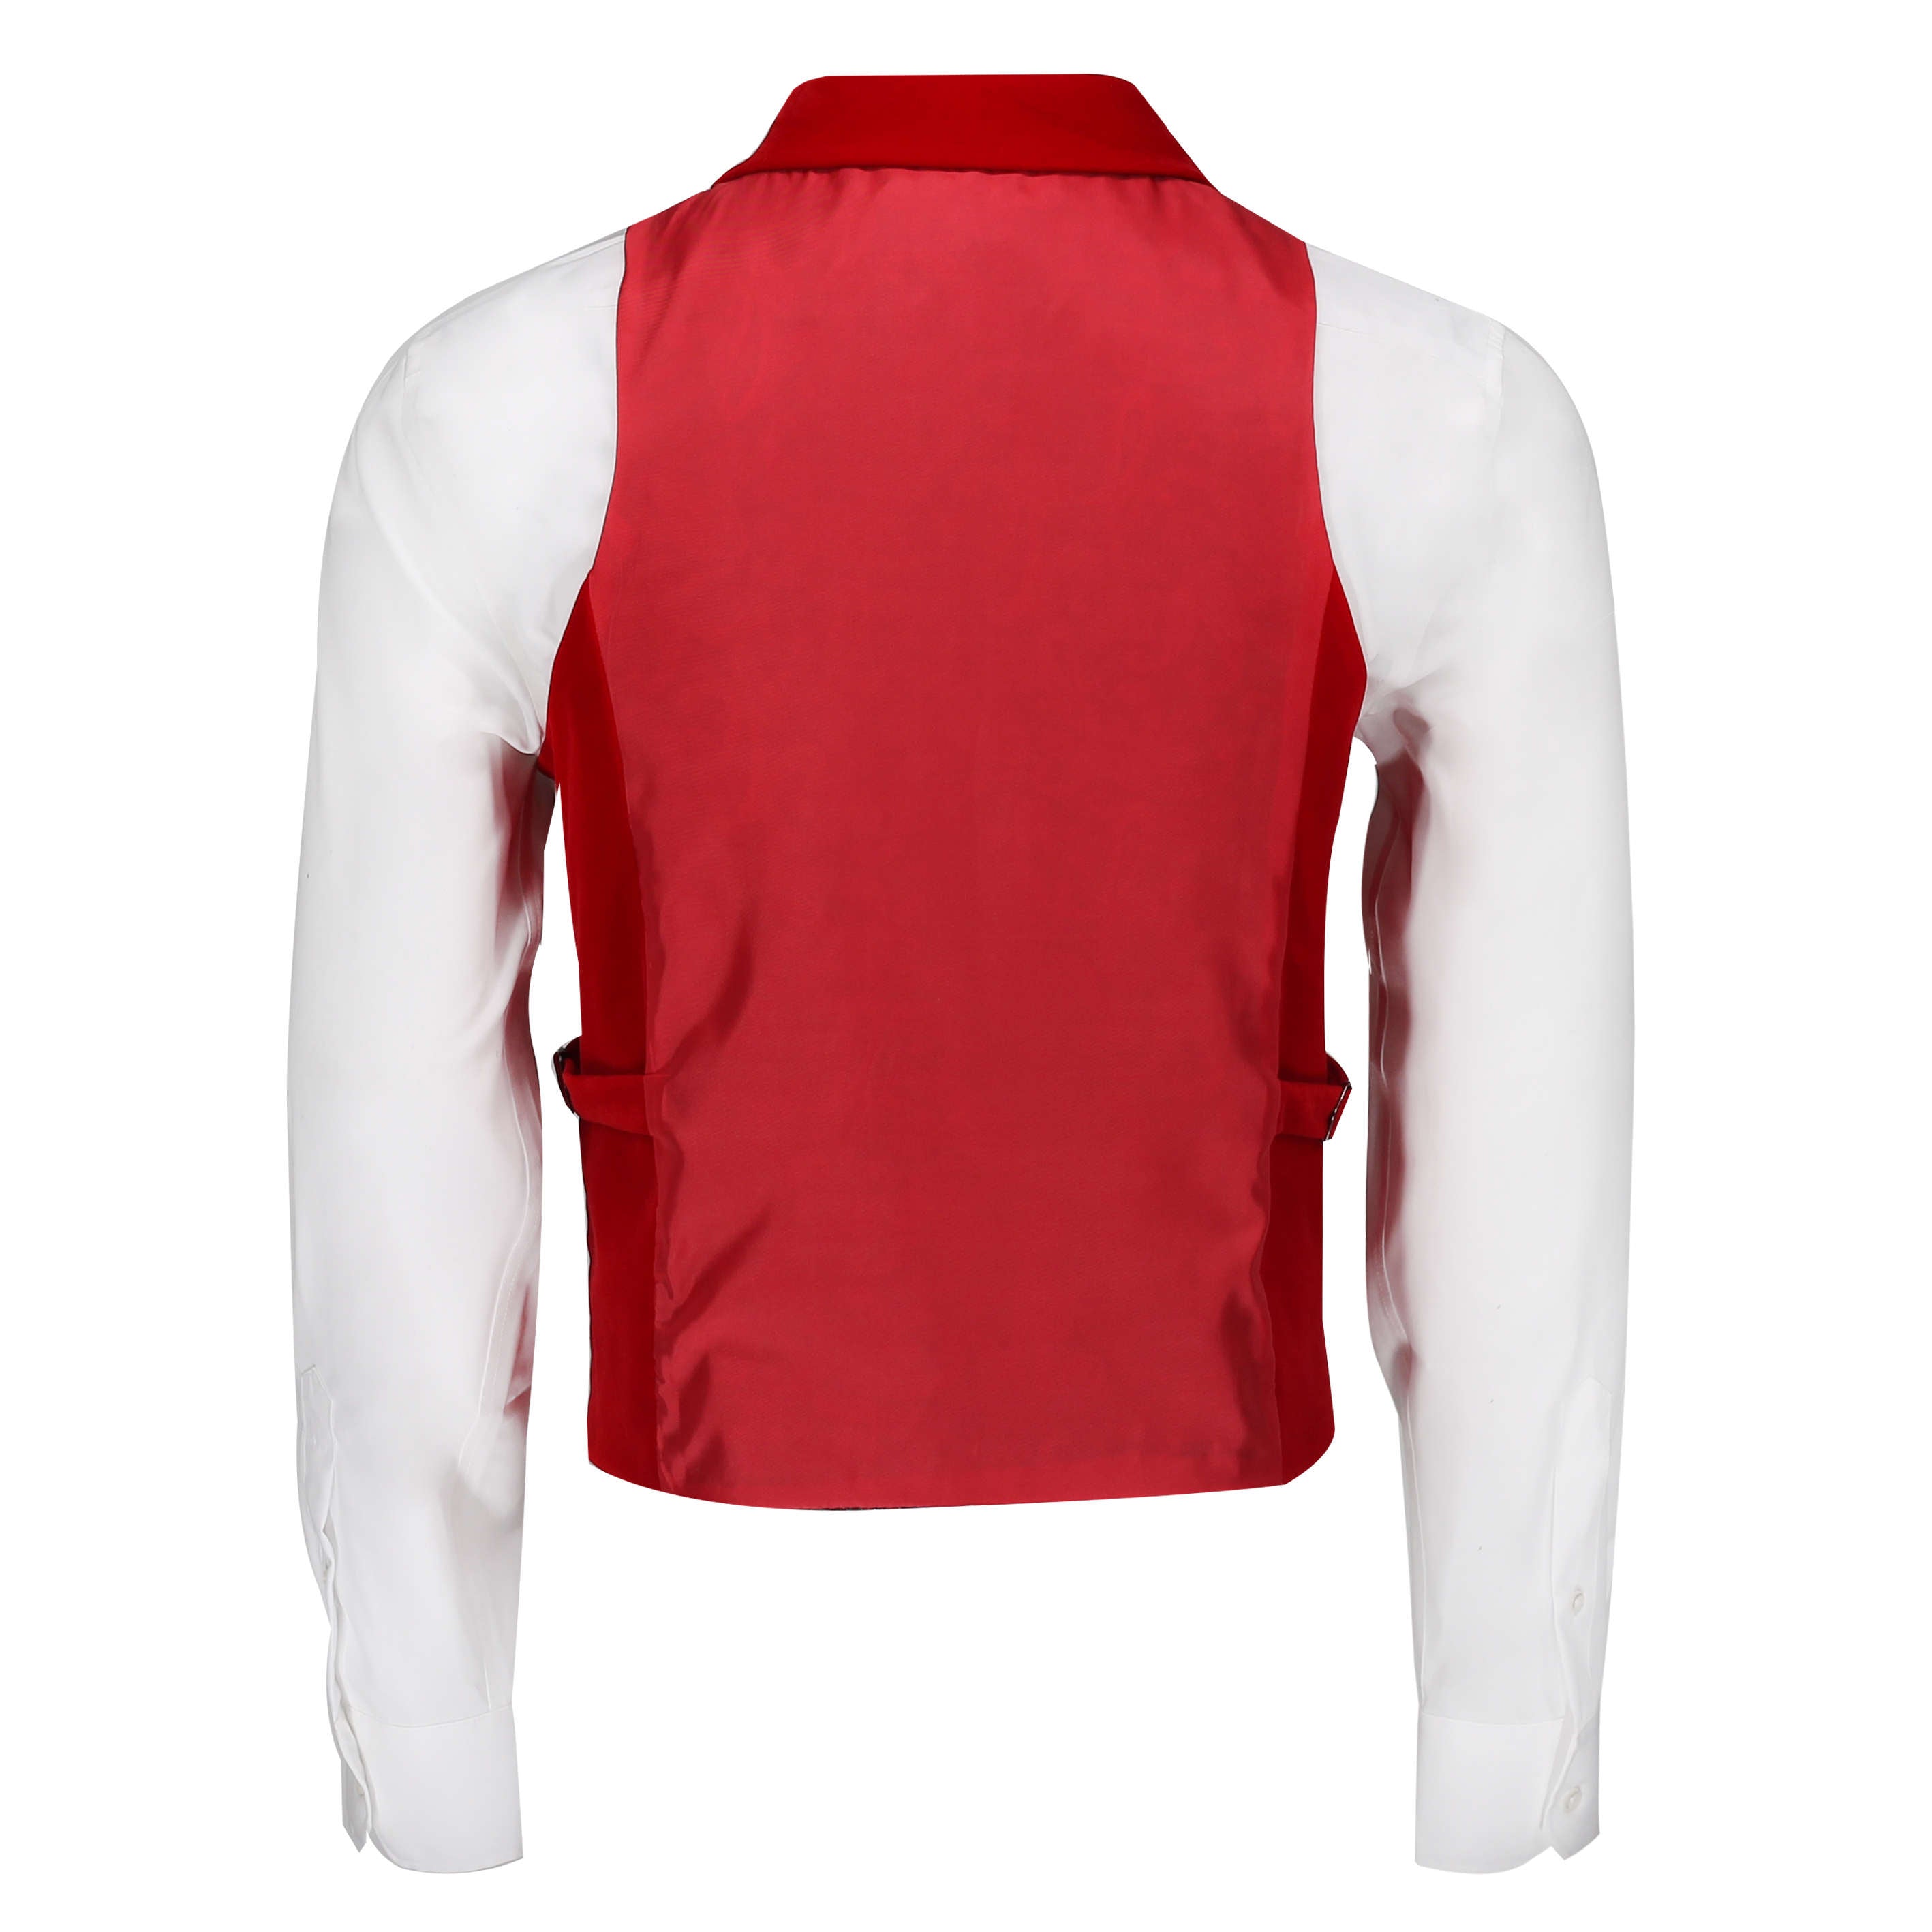 Red Velvet Double Breasted Collar Waistcoat